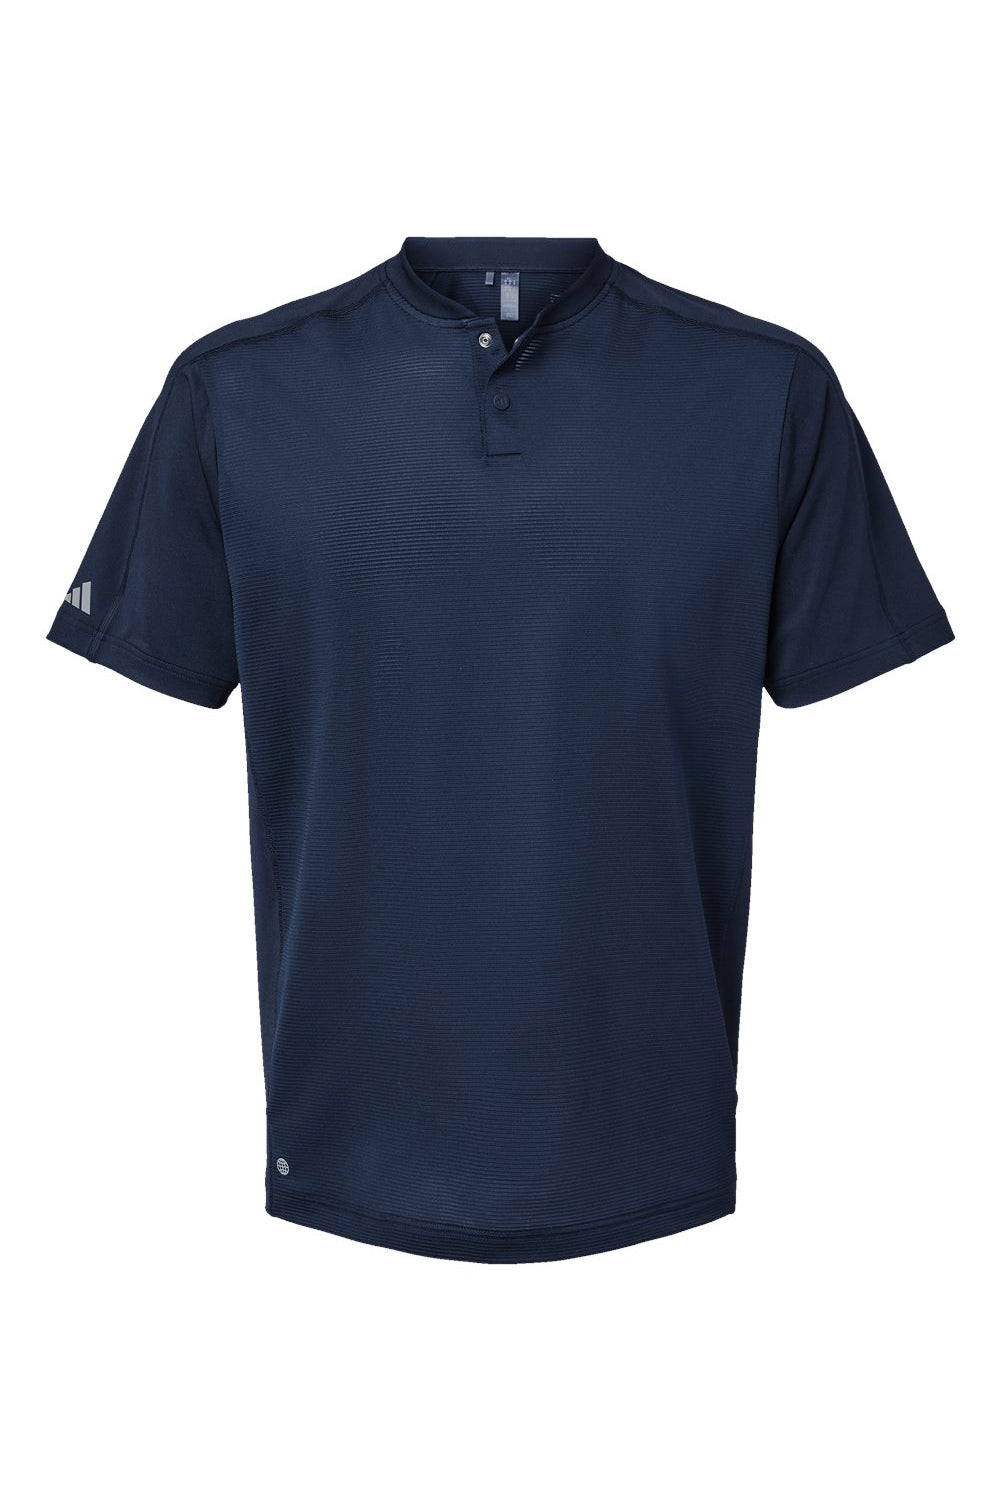 Adidas A584 Mens Sport Collar Short Sleeve Polo Shirt Collegiate Navy Blue Flat Front